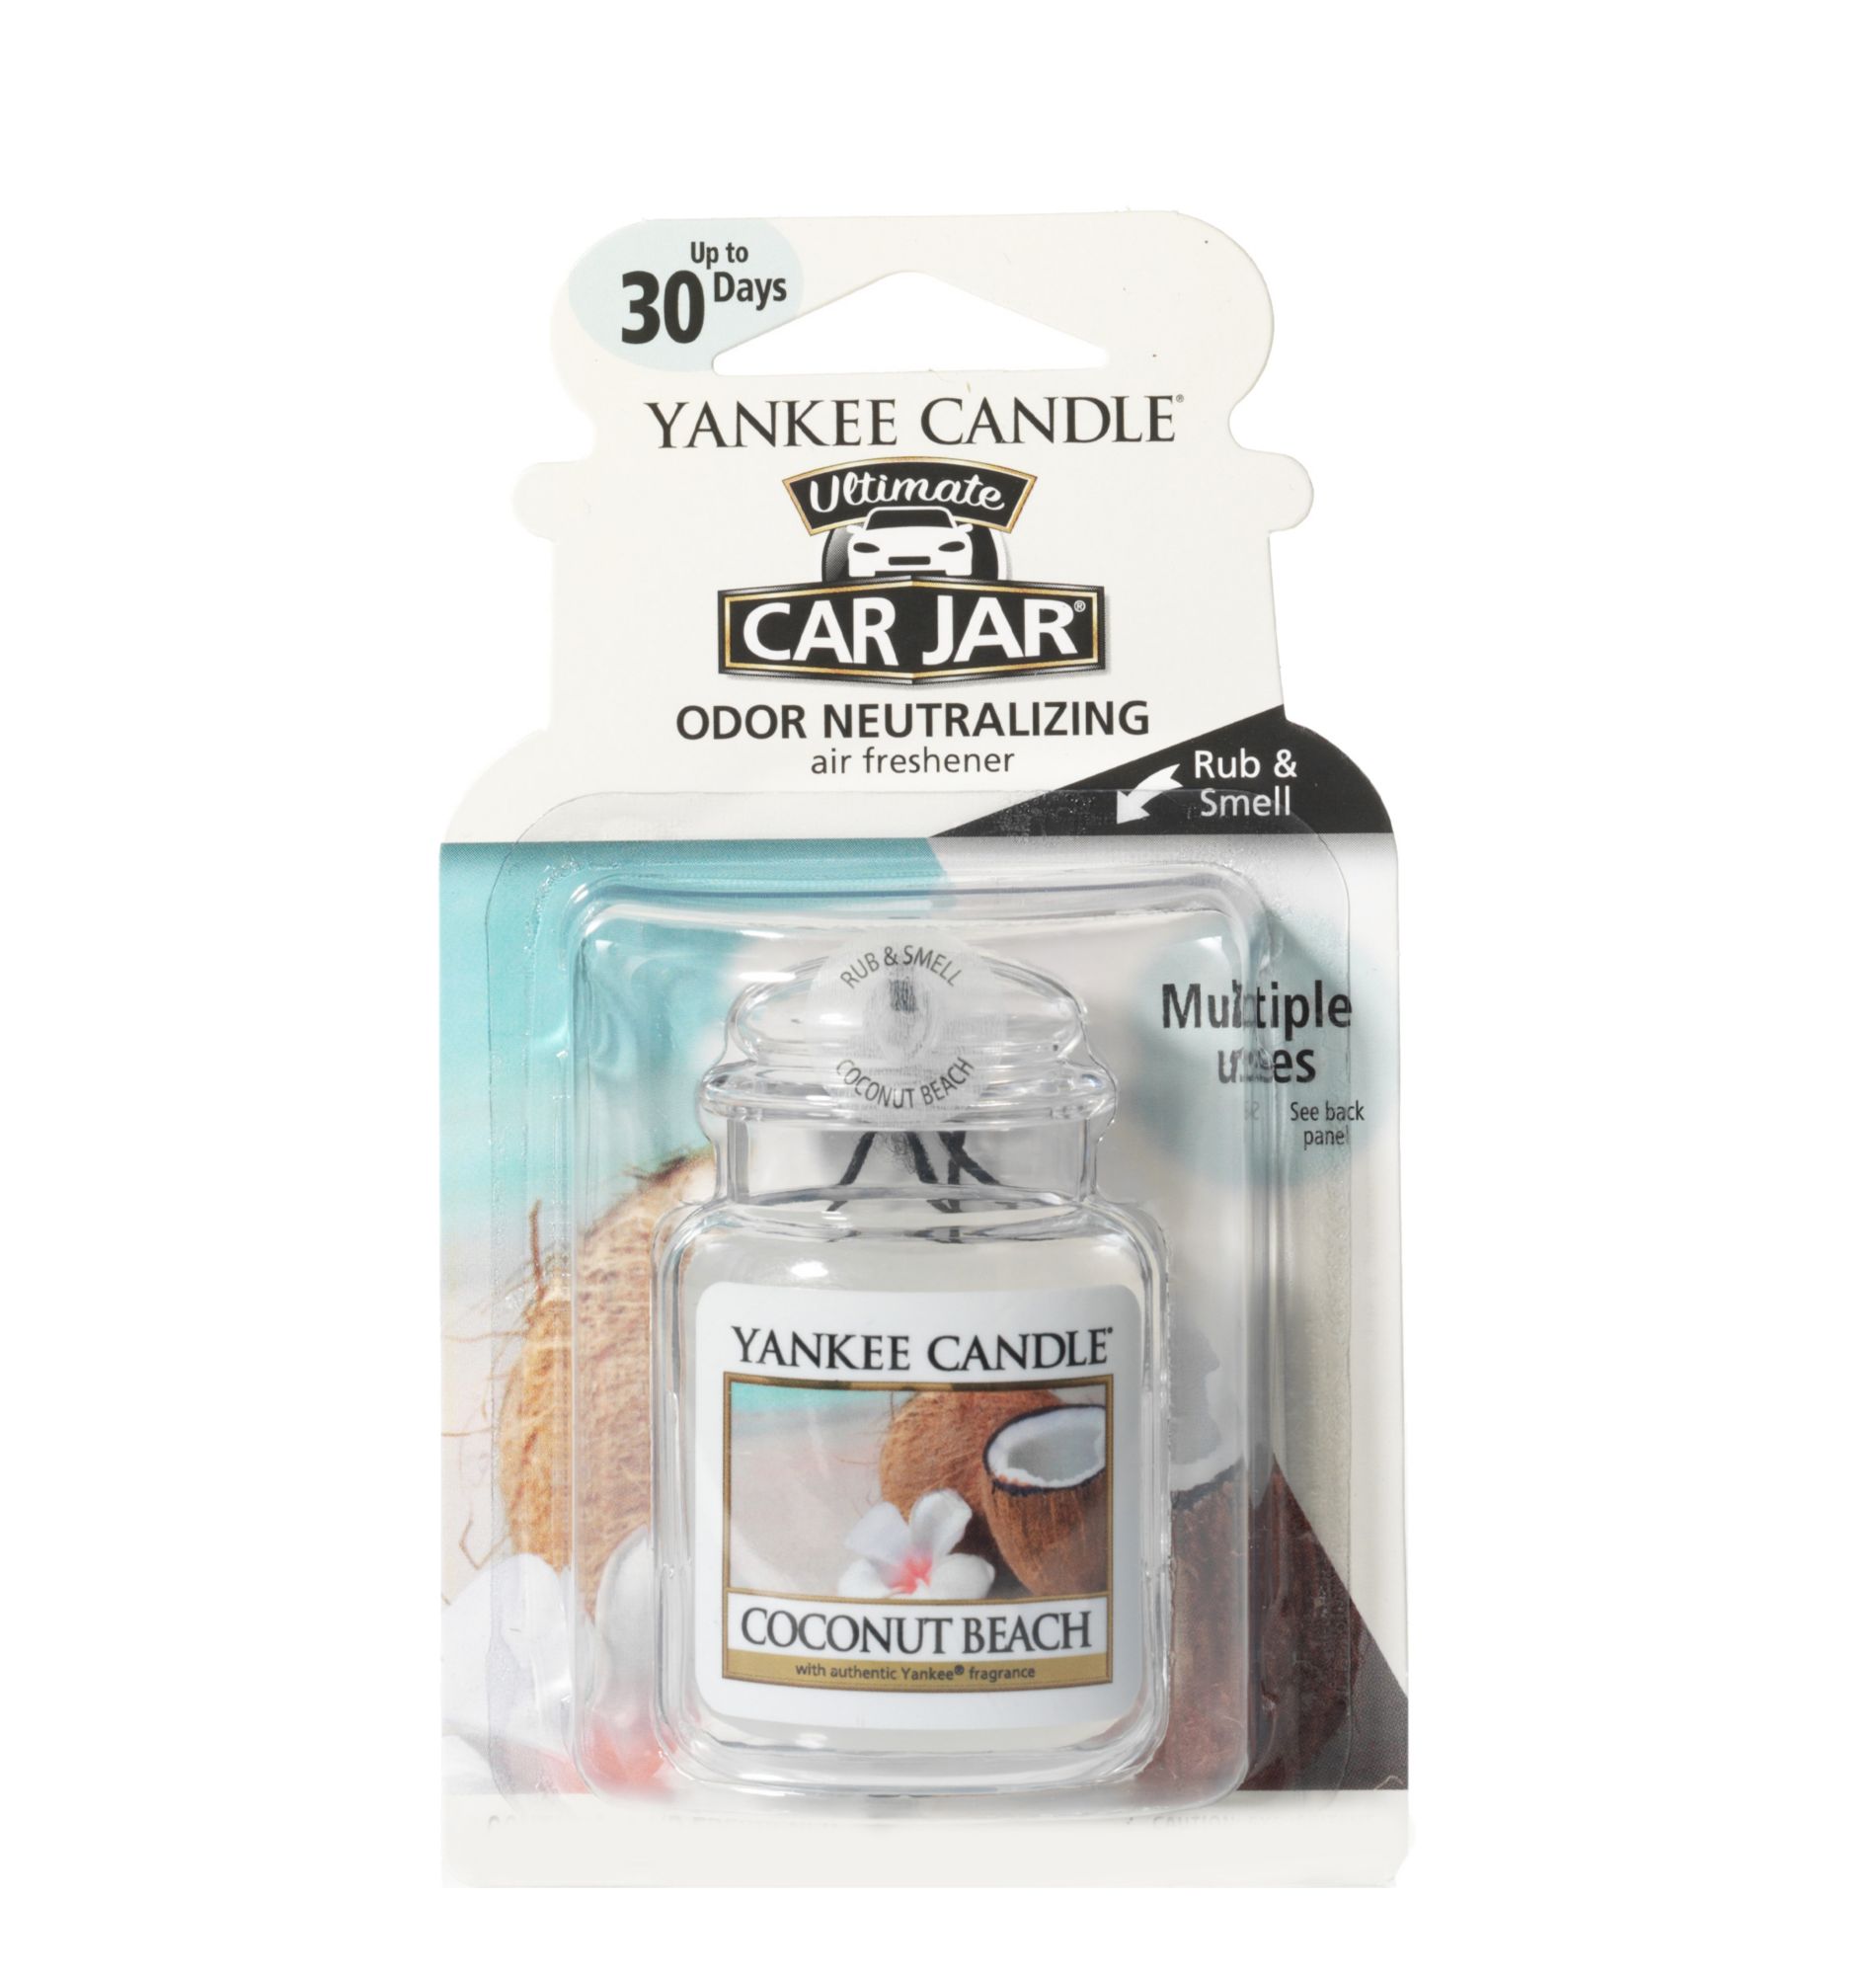 Yankee Candle - Car jar Black coconut - Ma Jolie Bougie